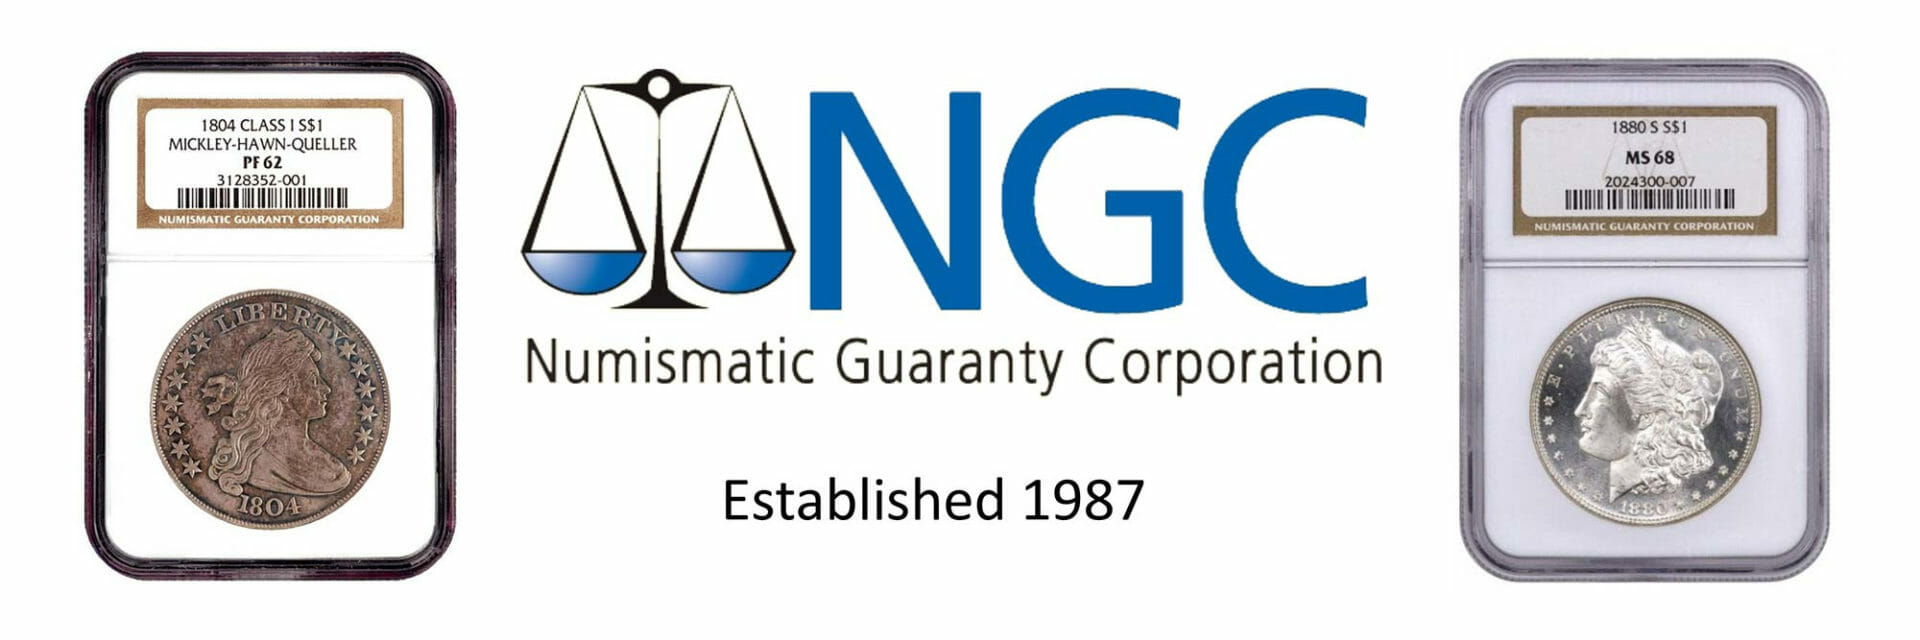 Nusmismatic Guaranty Corporation